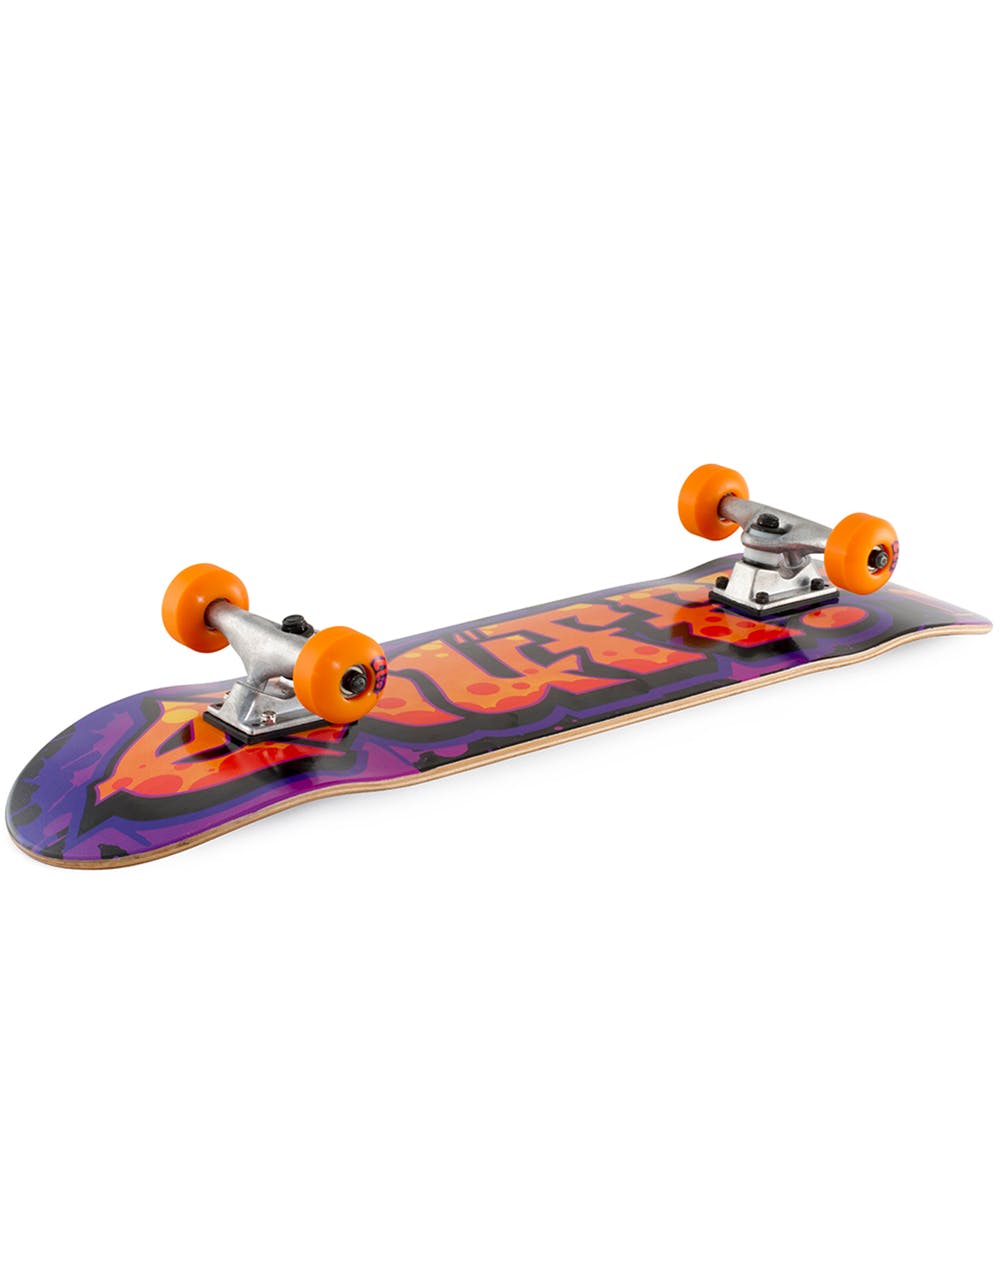 Enuff Graffiti II Mini Complete Skateboard - 7.25"